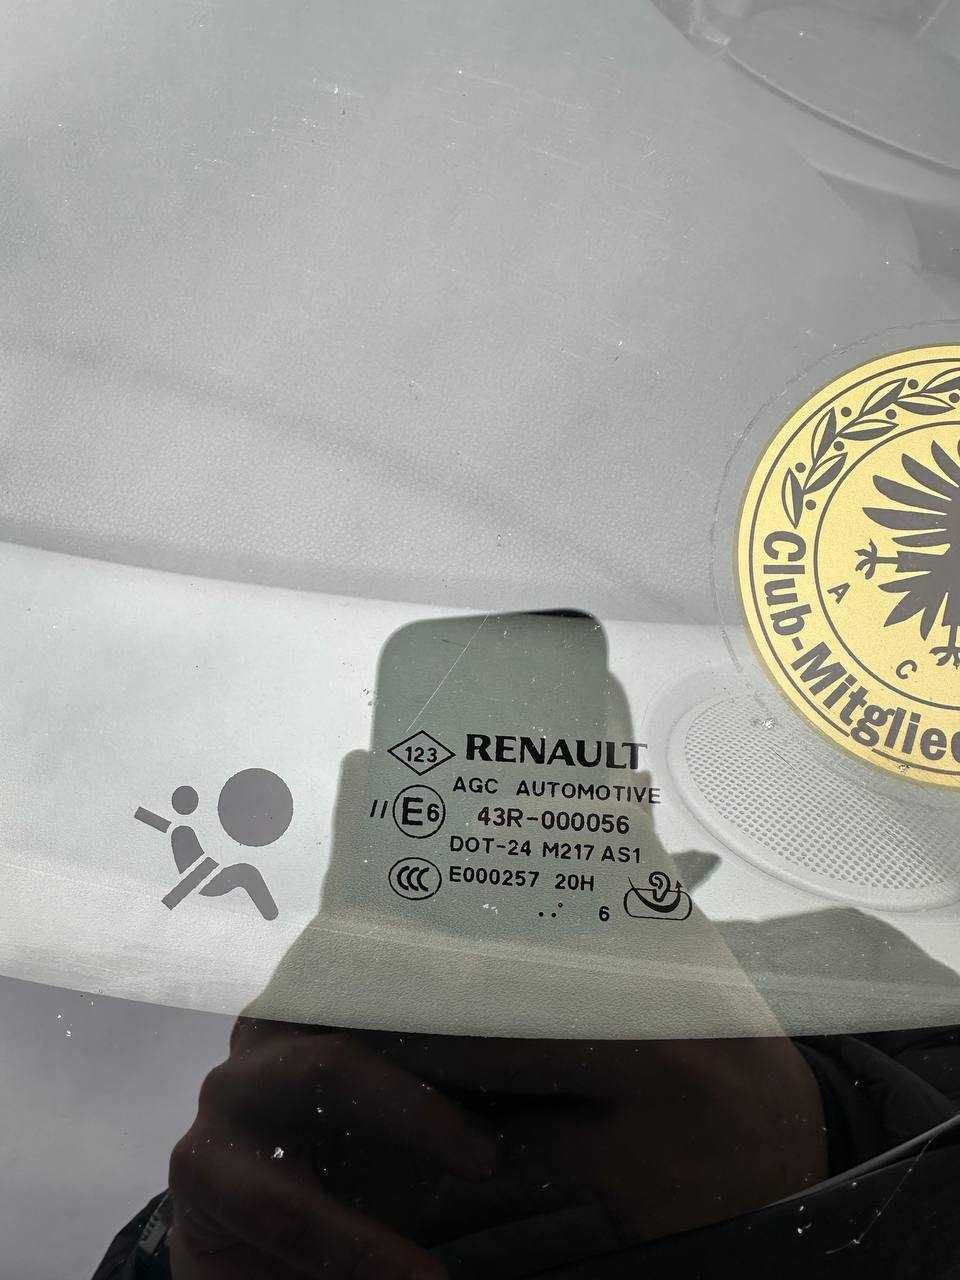 Рено Сценик Renault Scenic дизель ідеальний стан